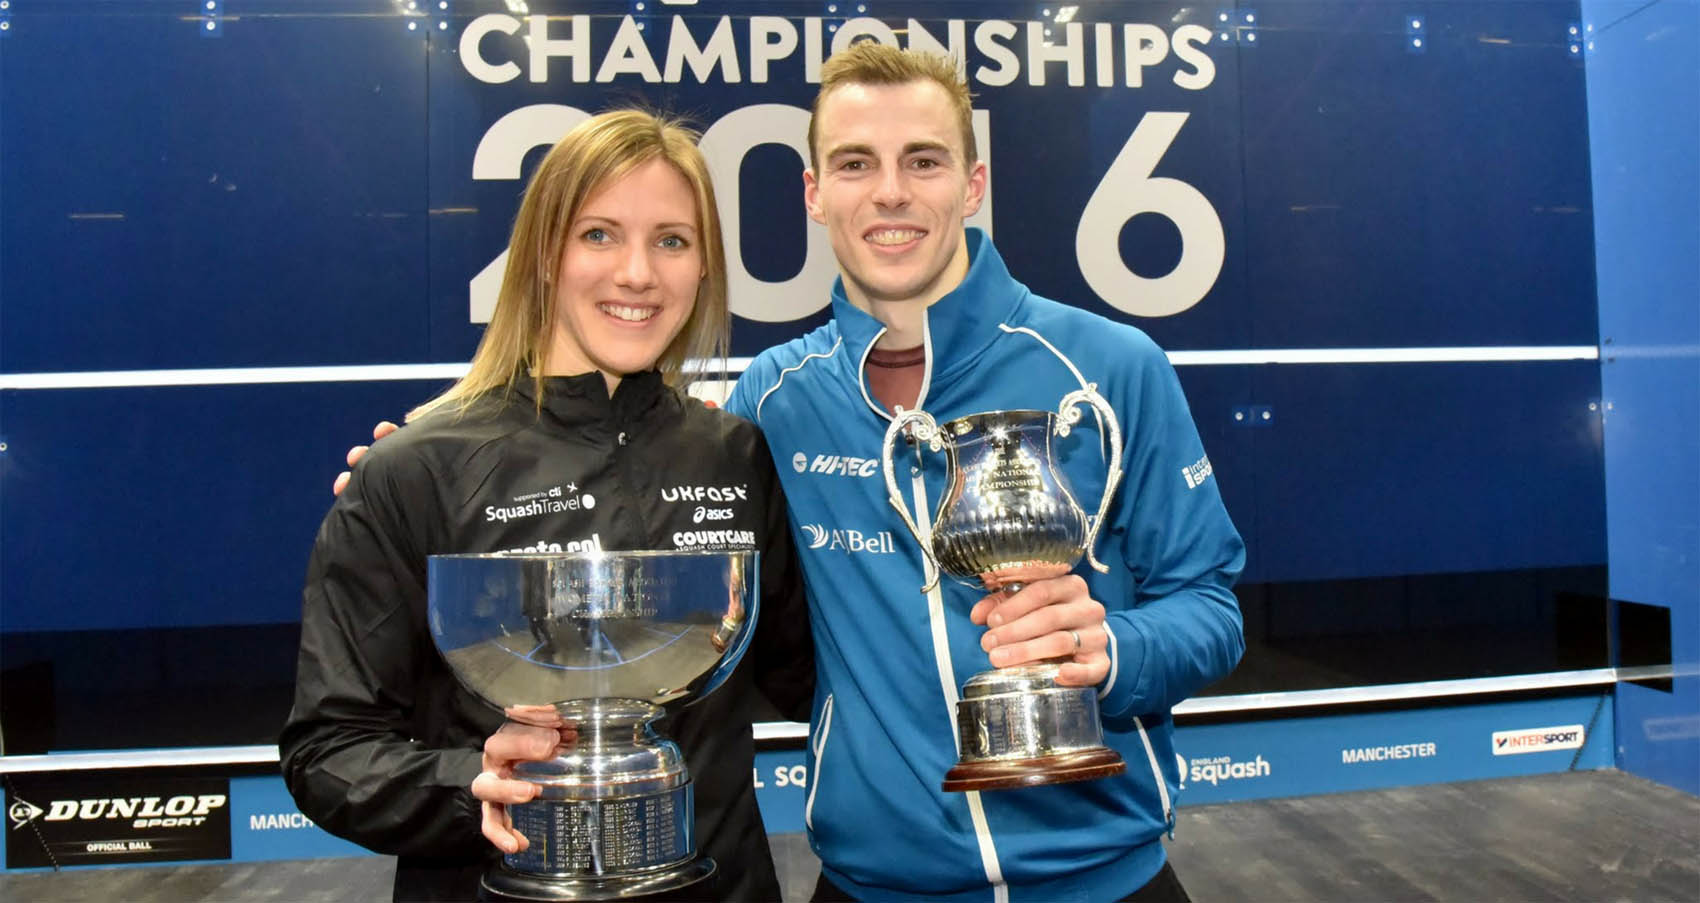 Laura Massaro and Nick Matthew with their 2016 National Squash Championship trophies